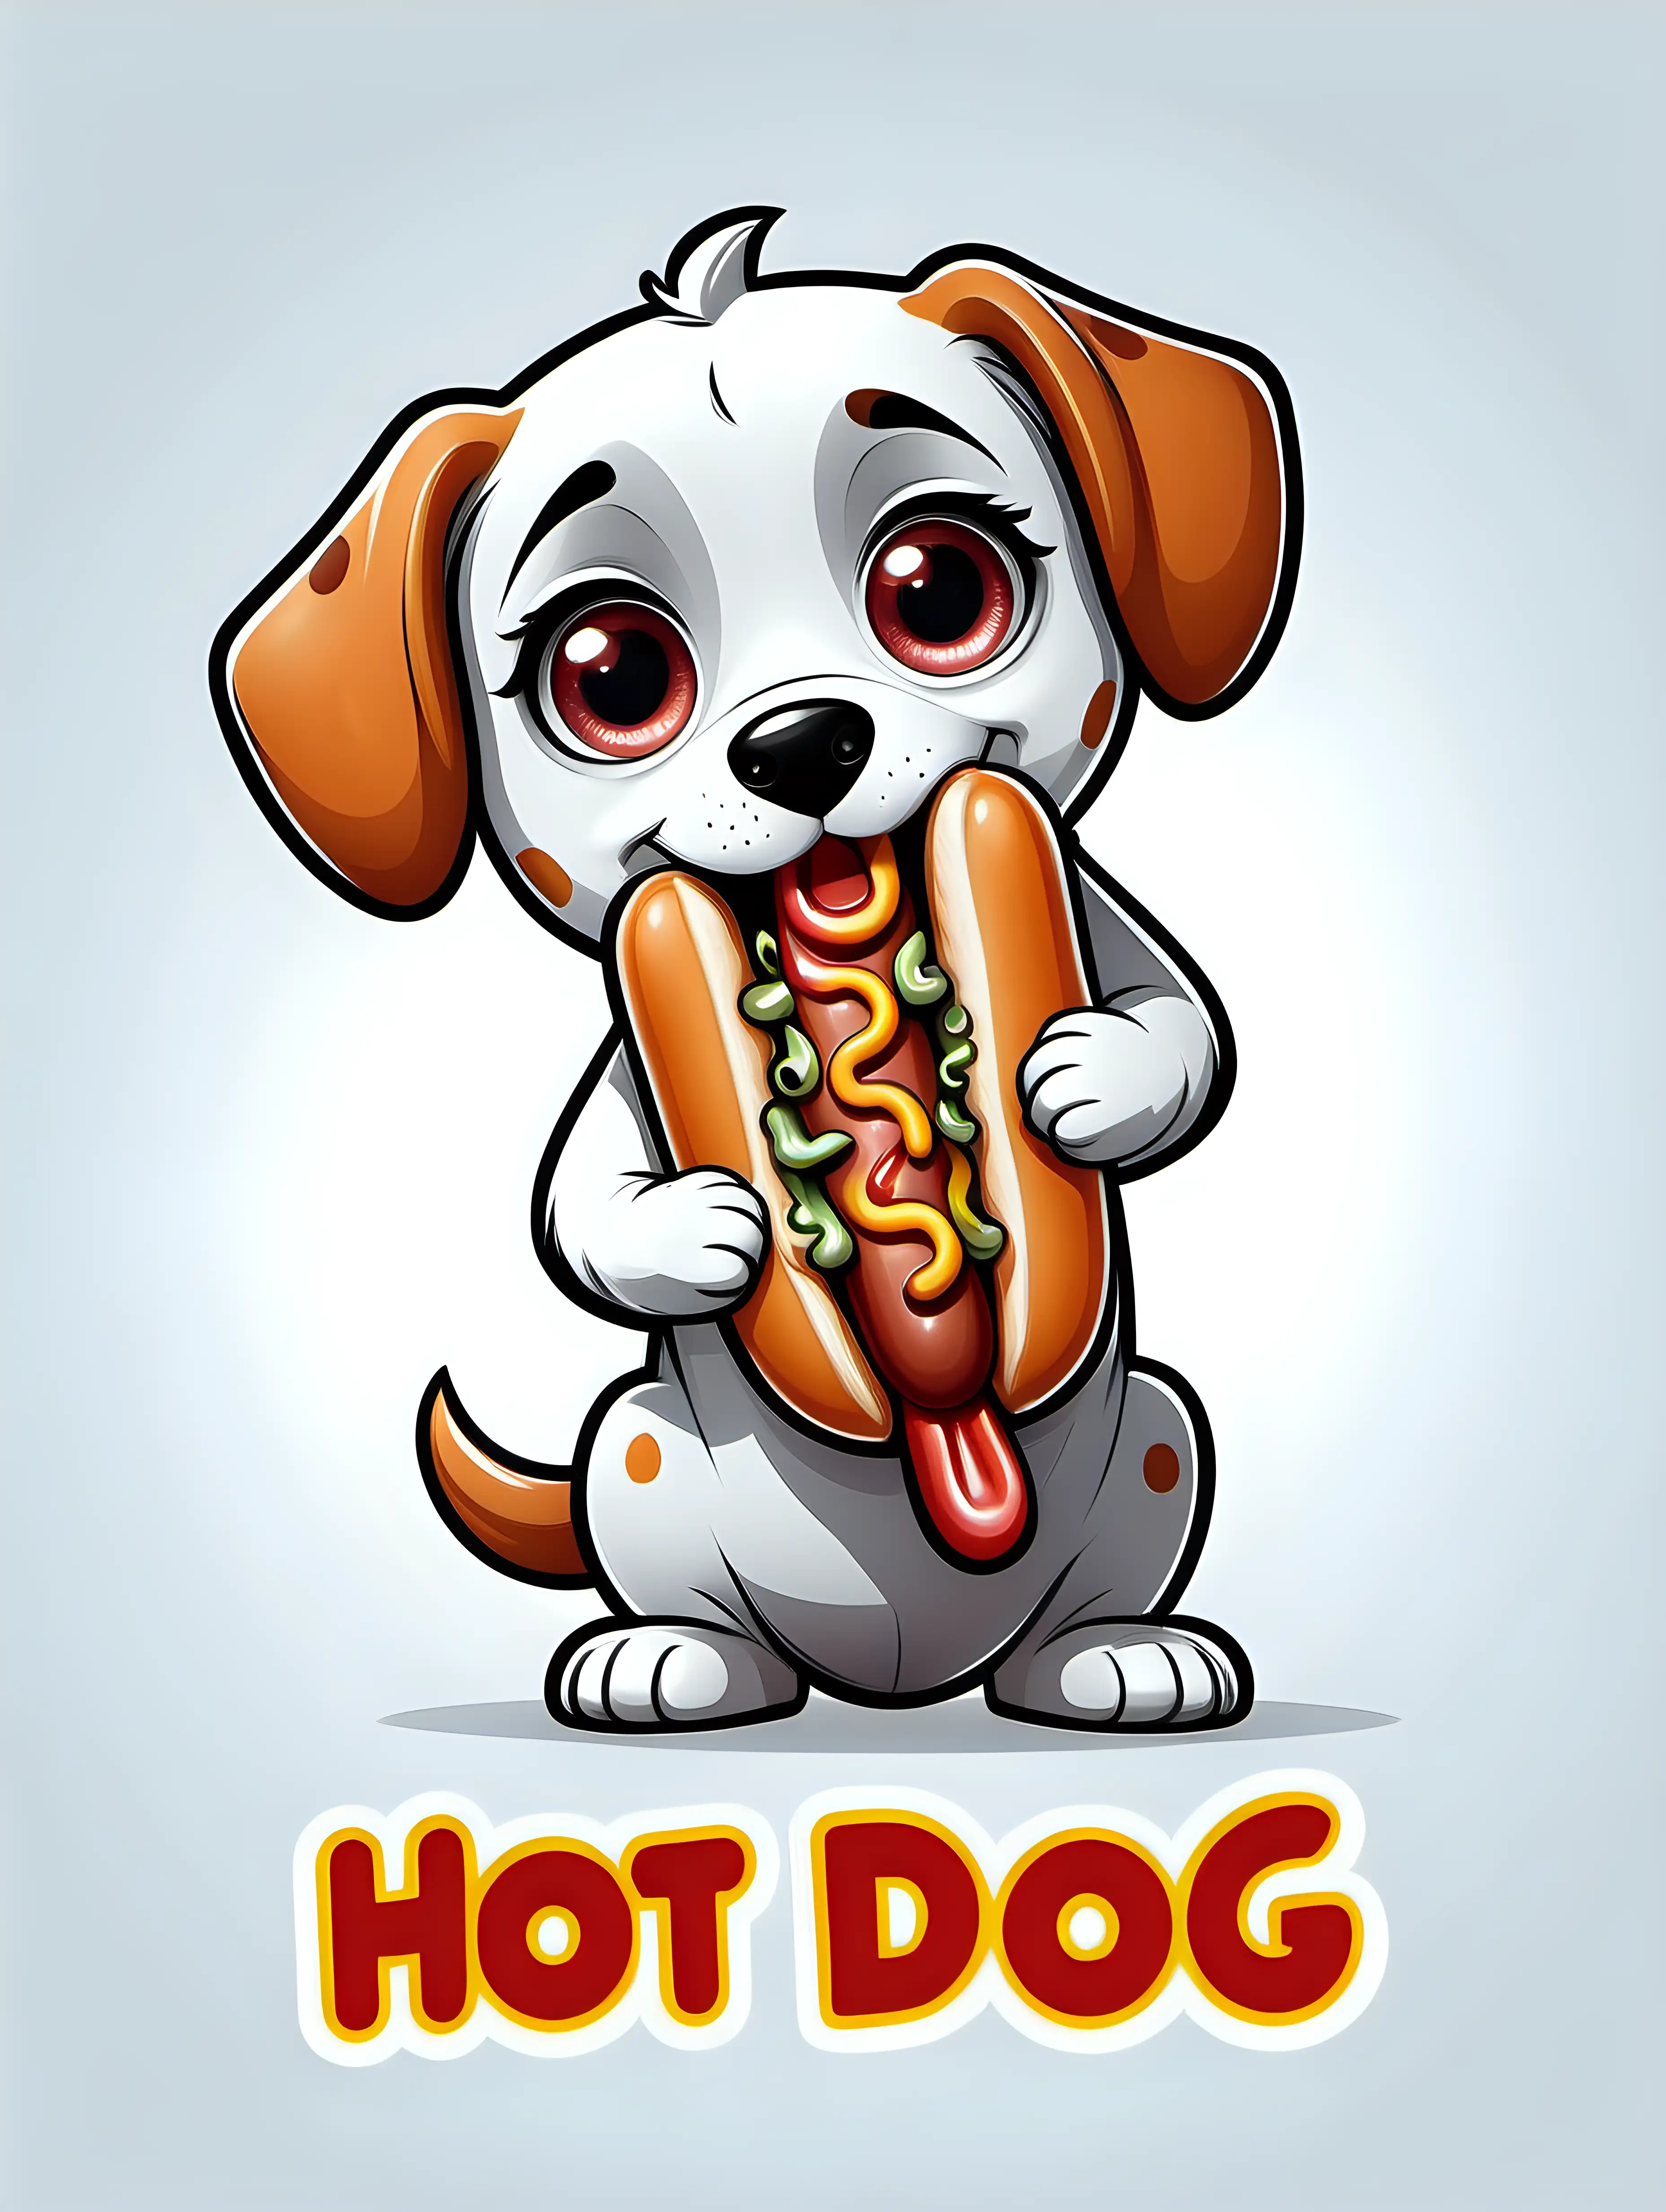 Adorable Dog Enjoying a Tasty Hot Dog in PixarInspired Style